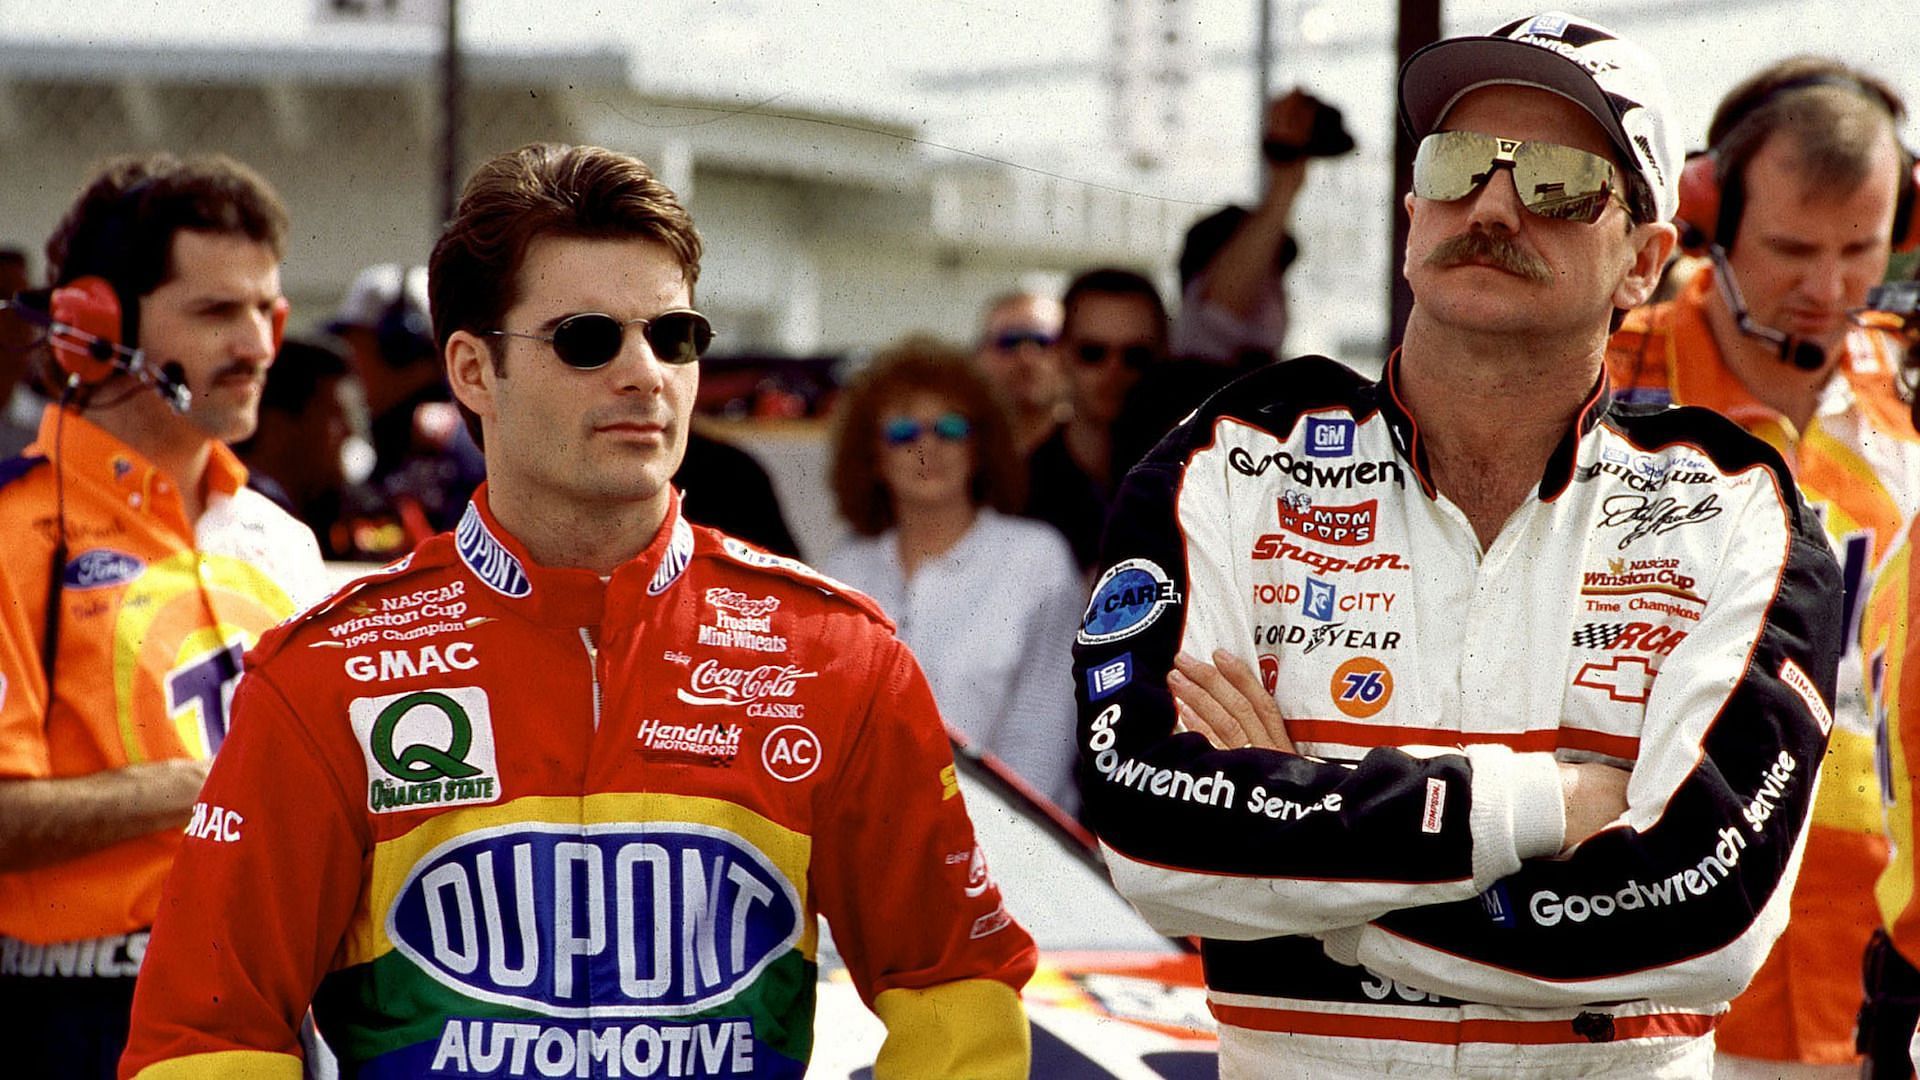 Jeff Gordon and Dale Earnhardt